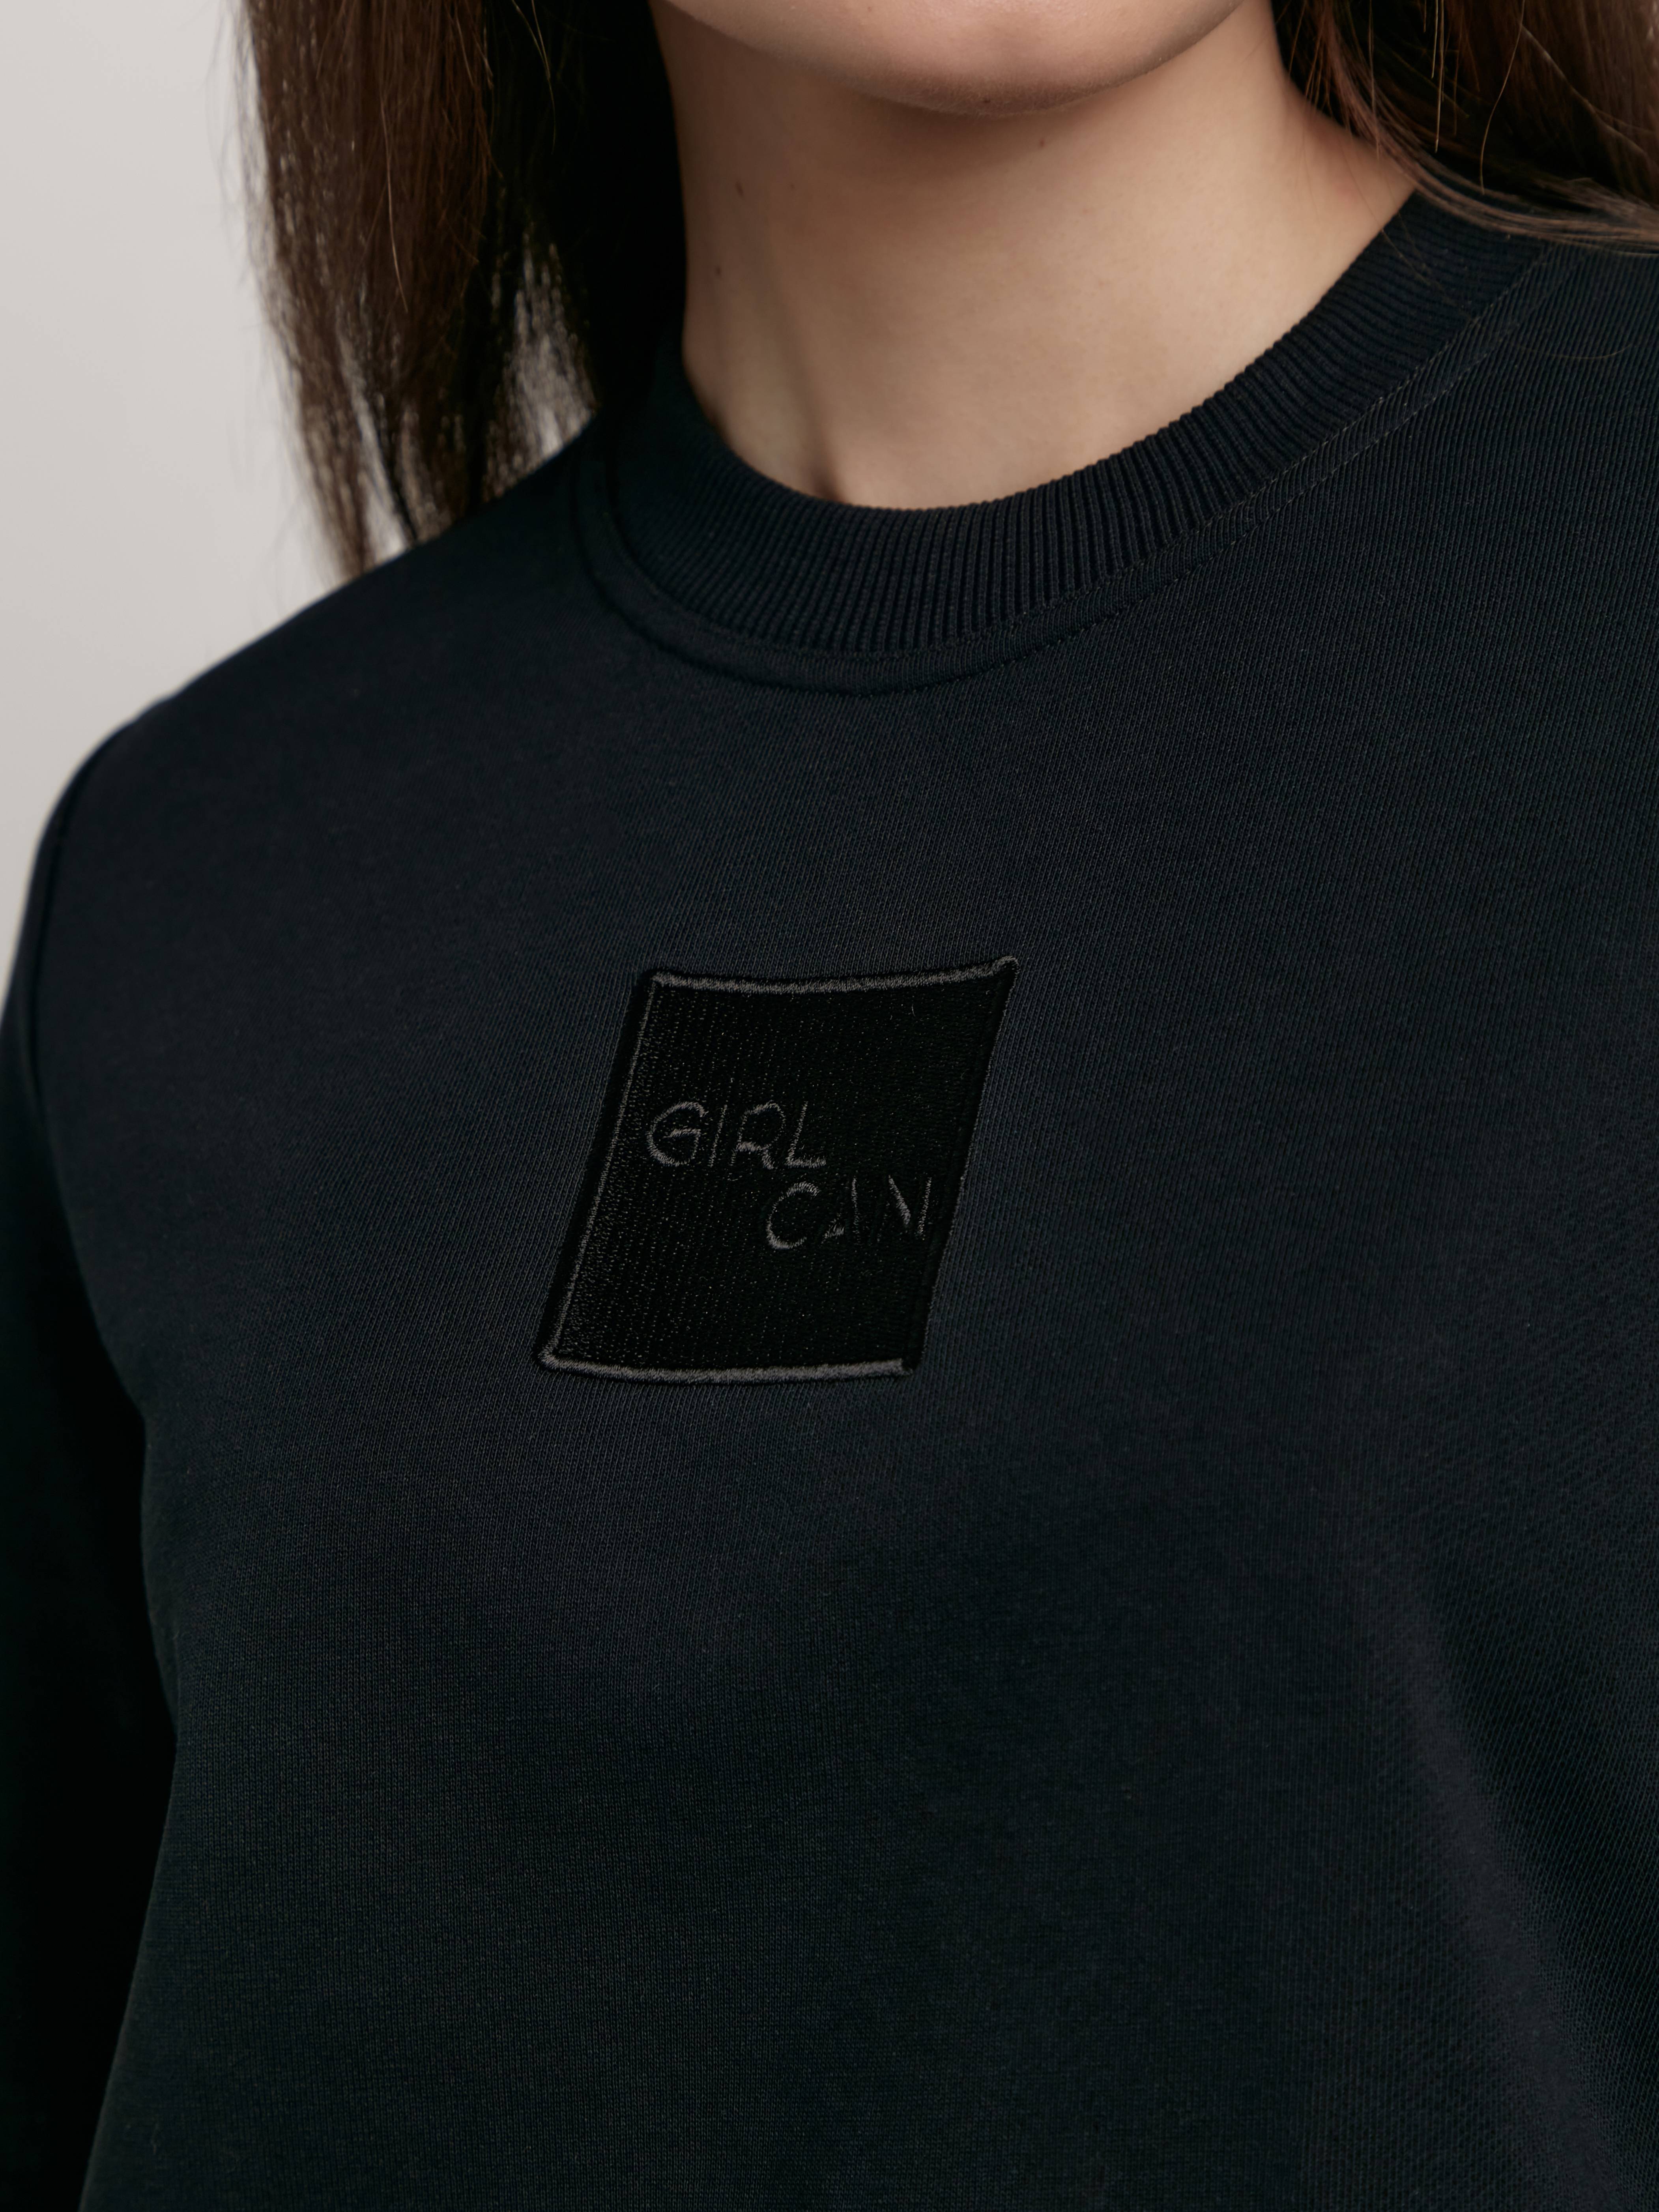 Свободная футболка из футера с вышивкой «Girl can» LD 2283 Conte ⭐️, цвет black, размер 170-84/xs - фото 1